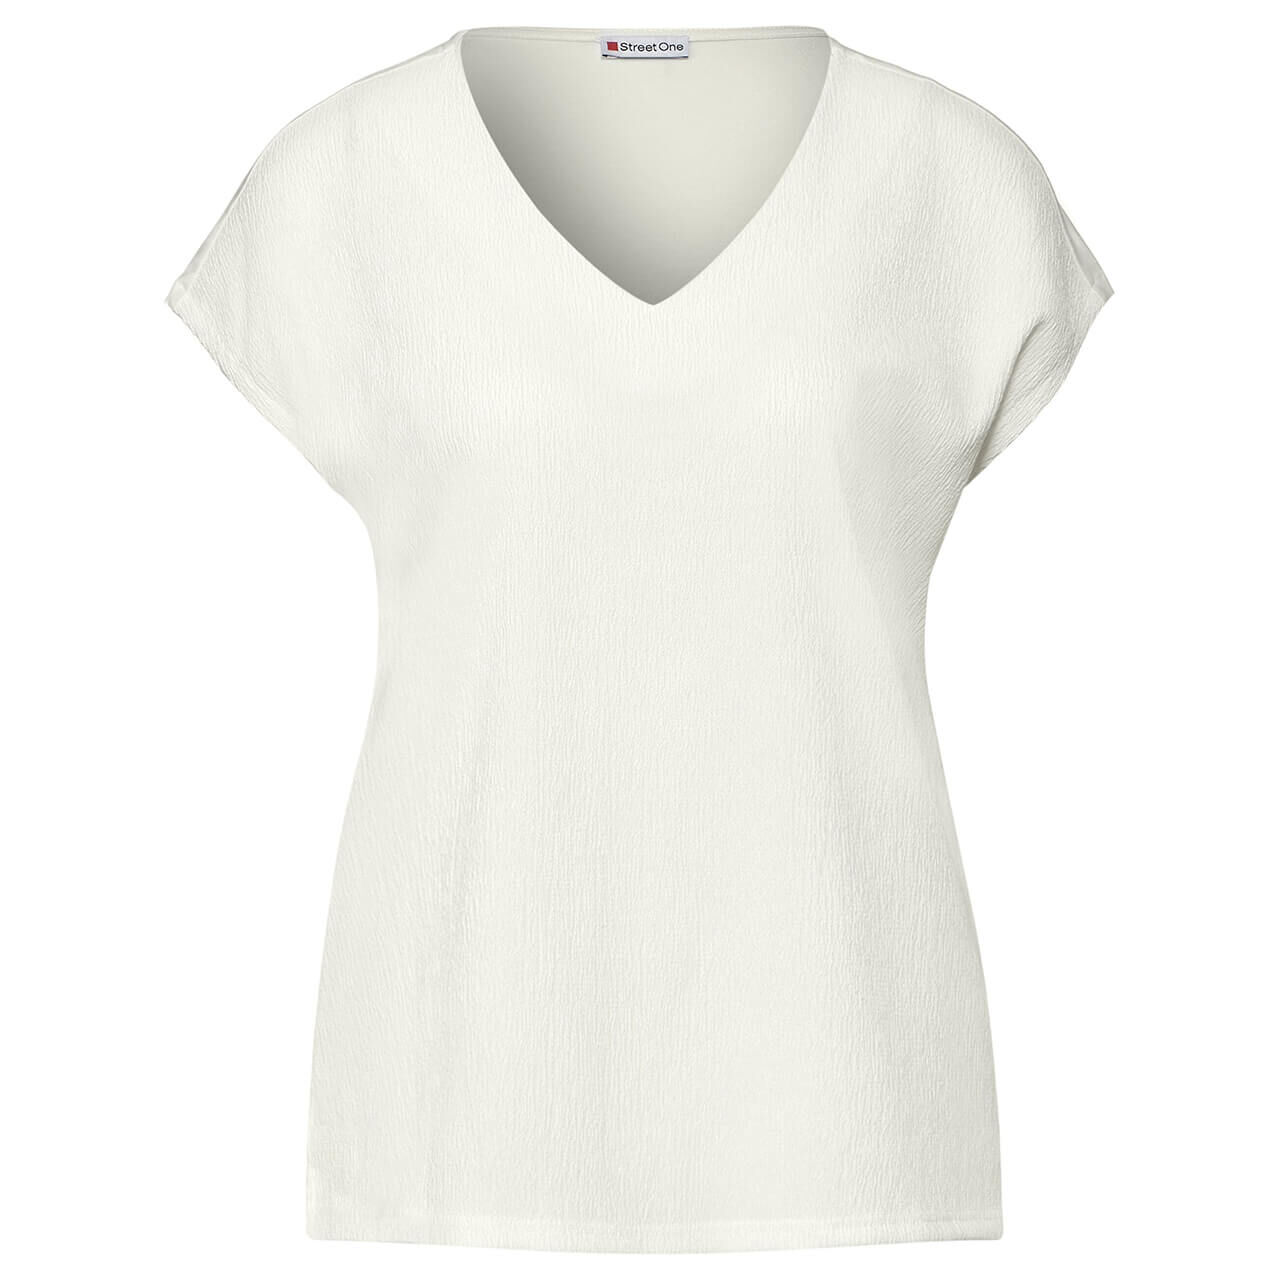 Street One Damen T-Shirt Structure Mix V-neck creme white